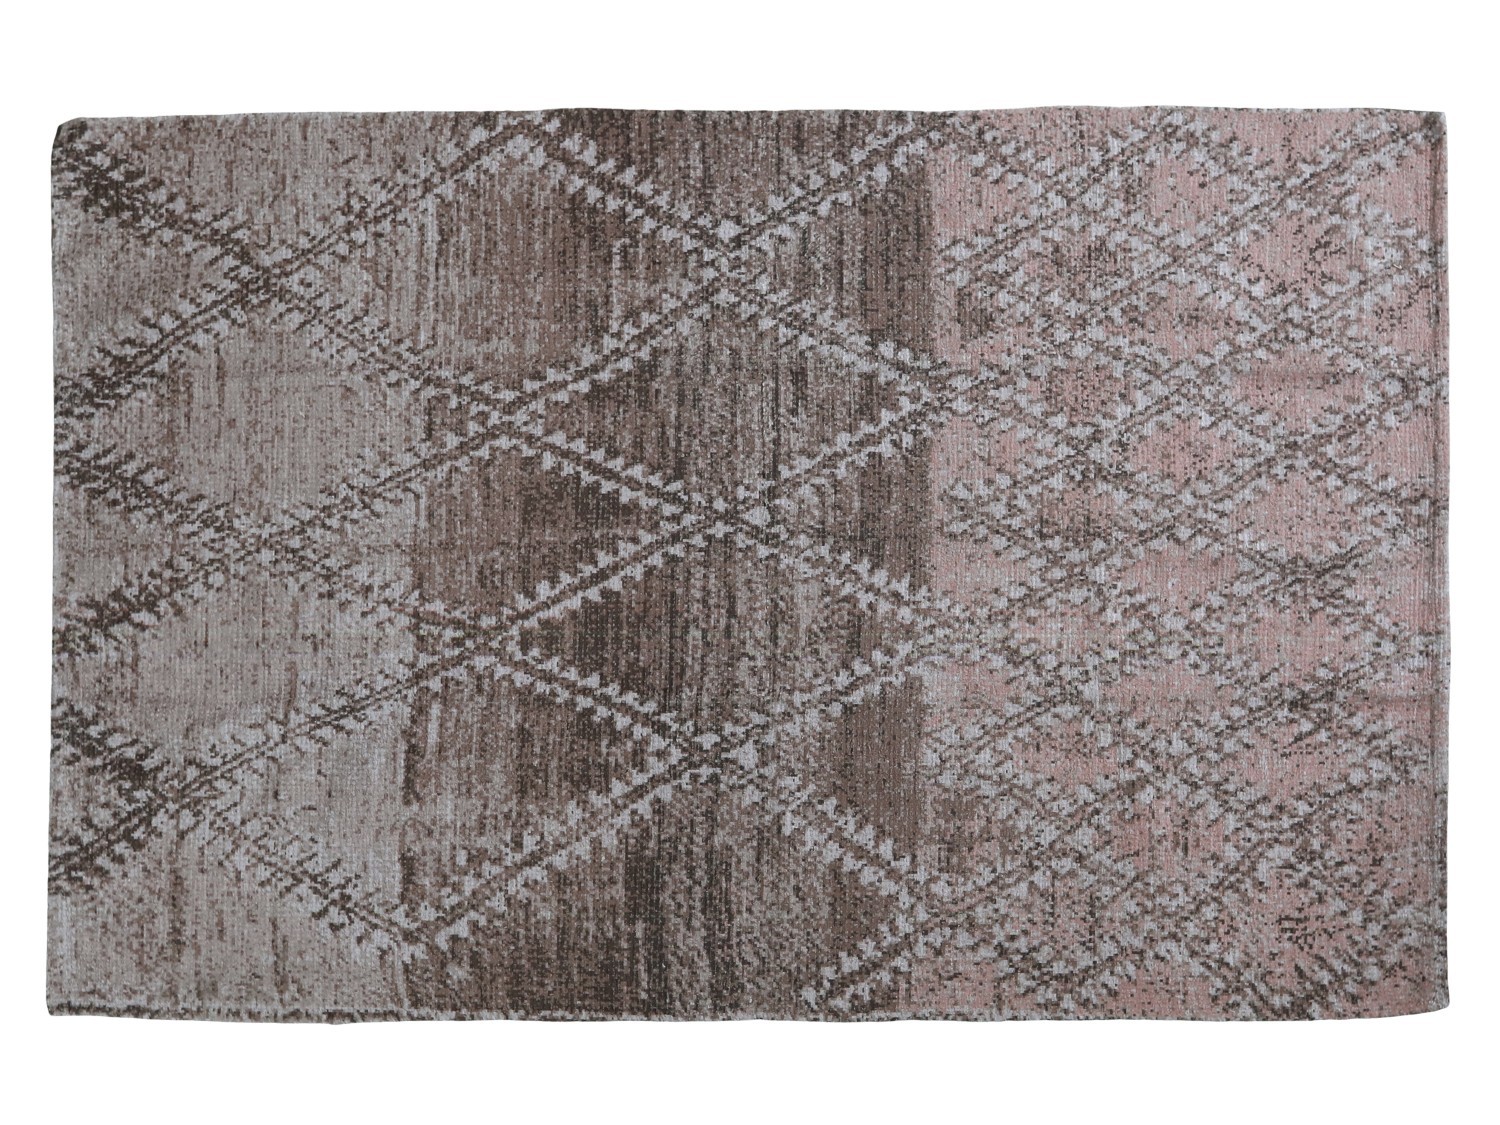 Růžový koberec s ornamenty Rug French print dusty rose - 120*180cm Chic Antique